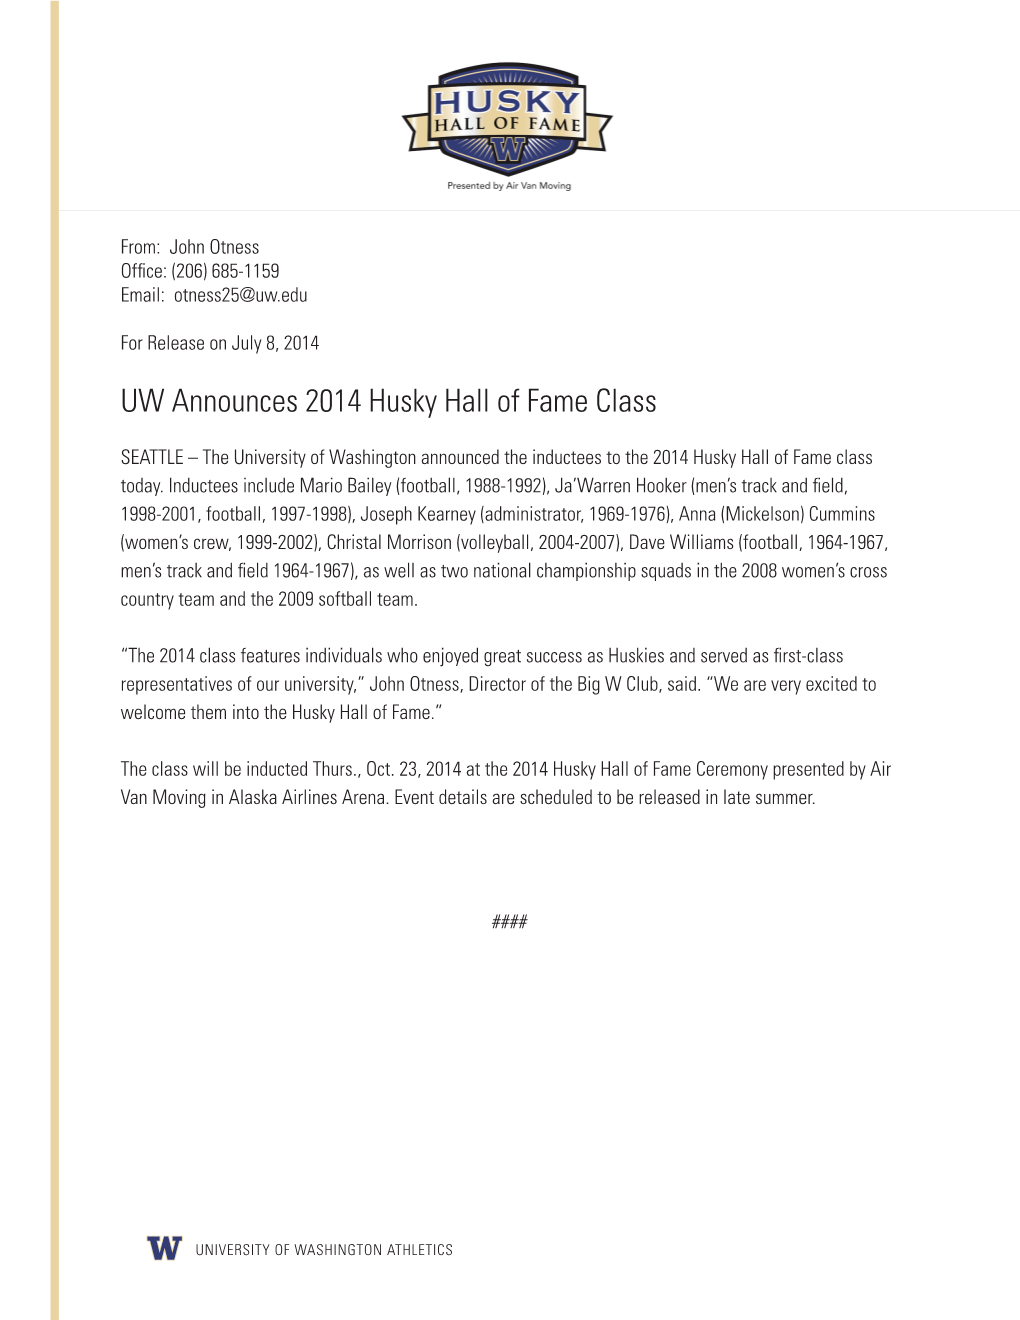 UW Announces 2014 Husky Hall of Fame Class